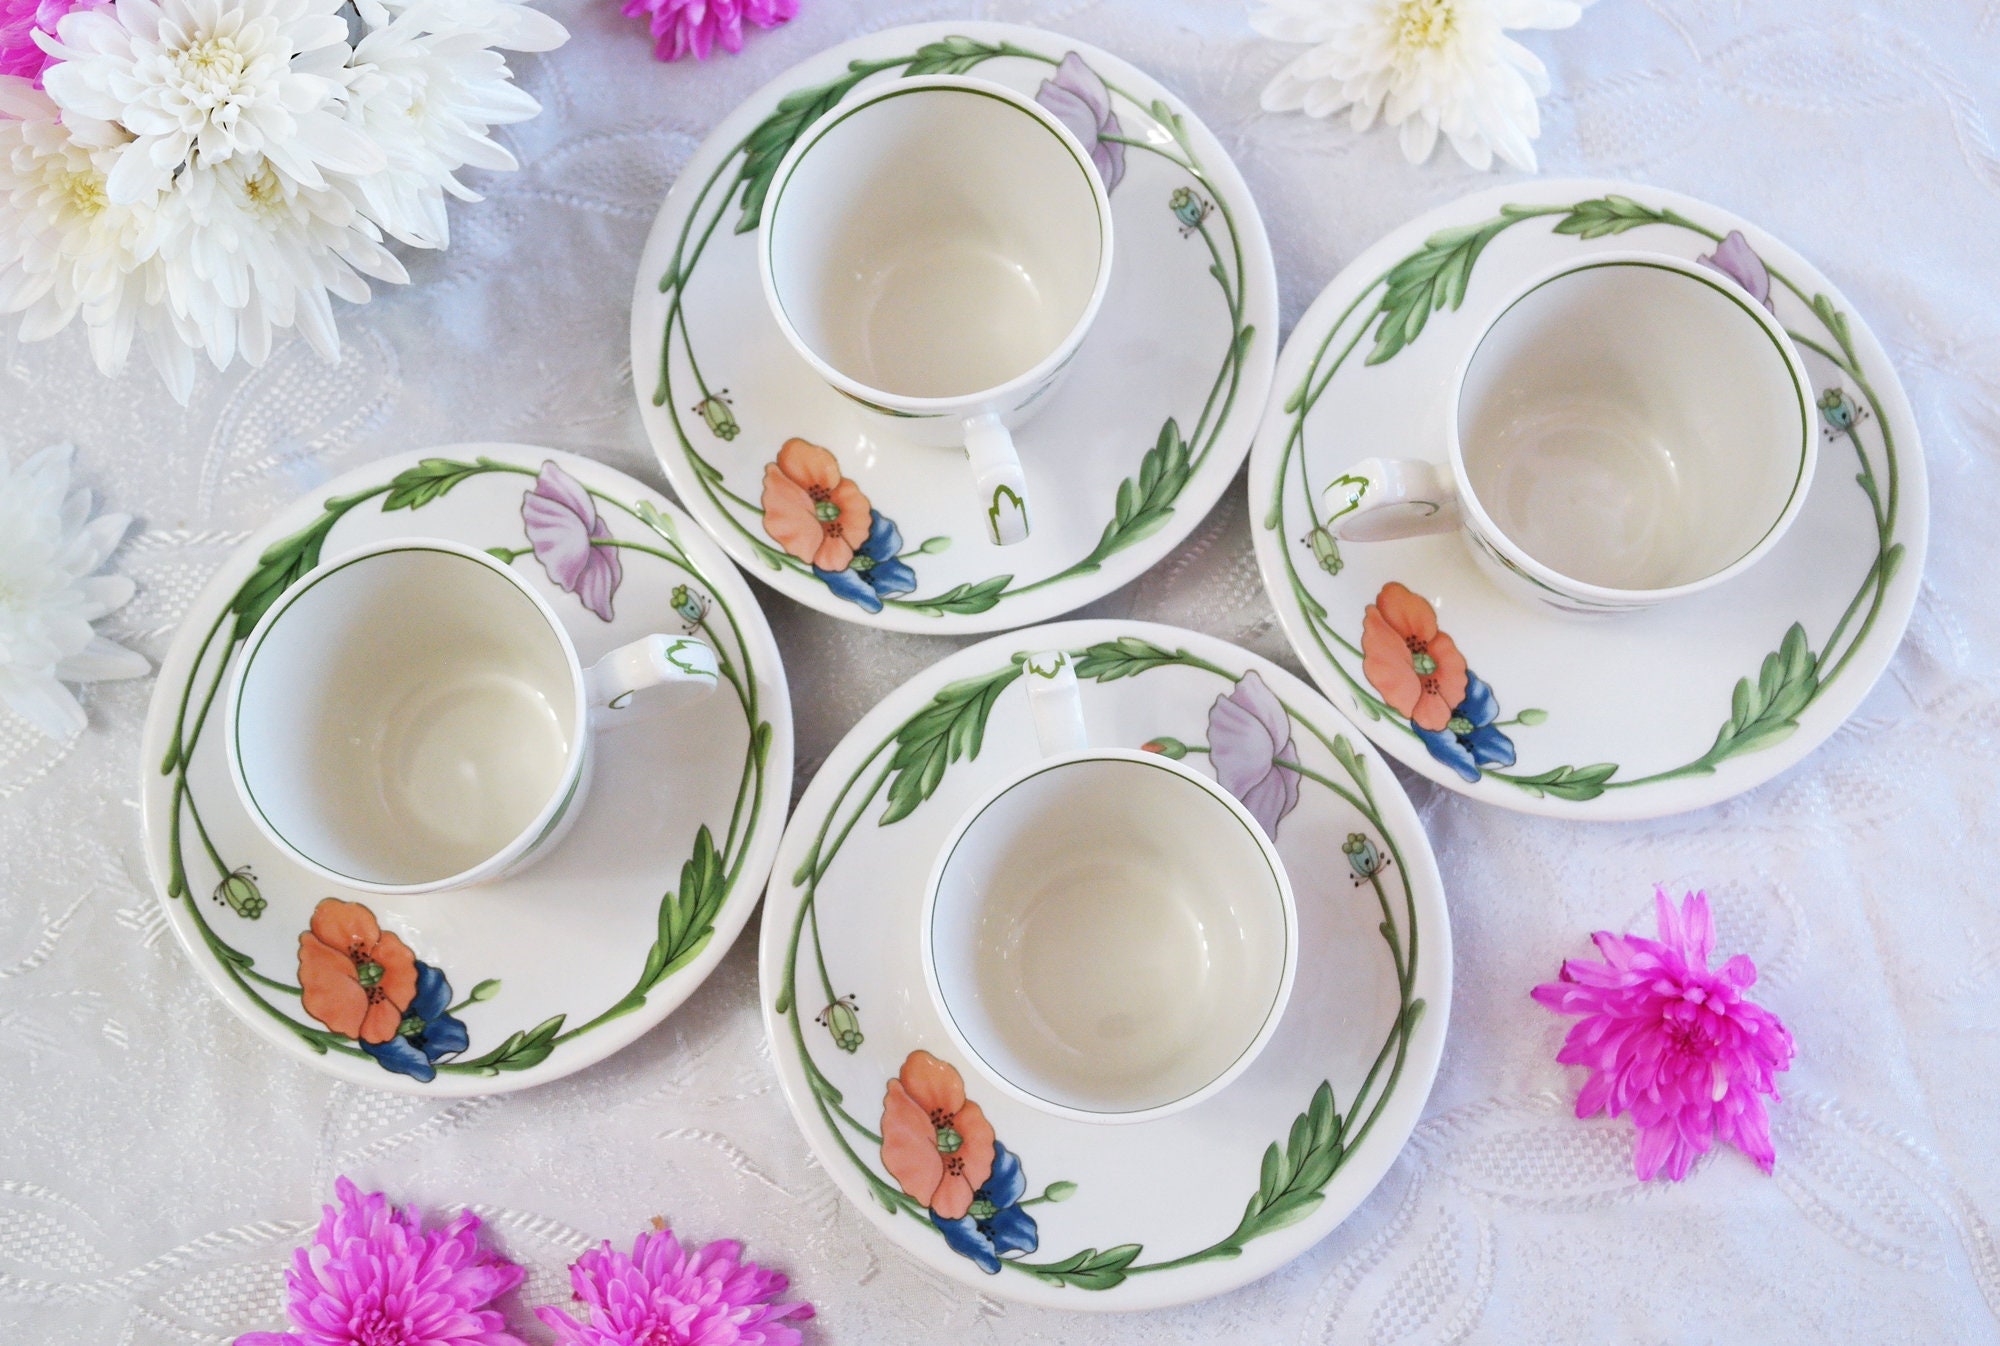 Set of 6 Vintage Floral Tea Cups and Saucers for Tea Party Supplies, Blue, Pink, 8oz, Size: 8 fl oz